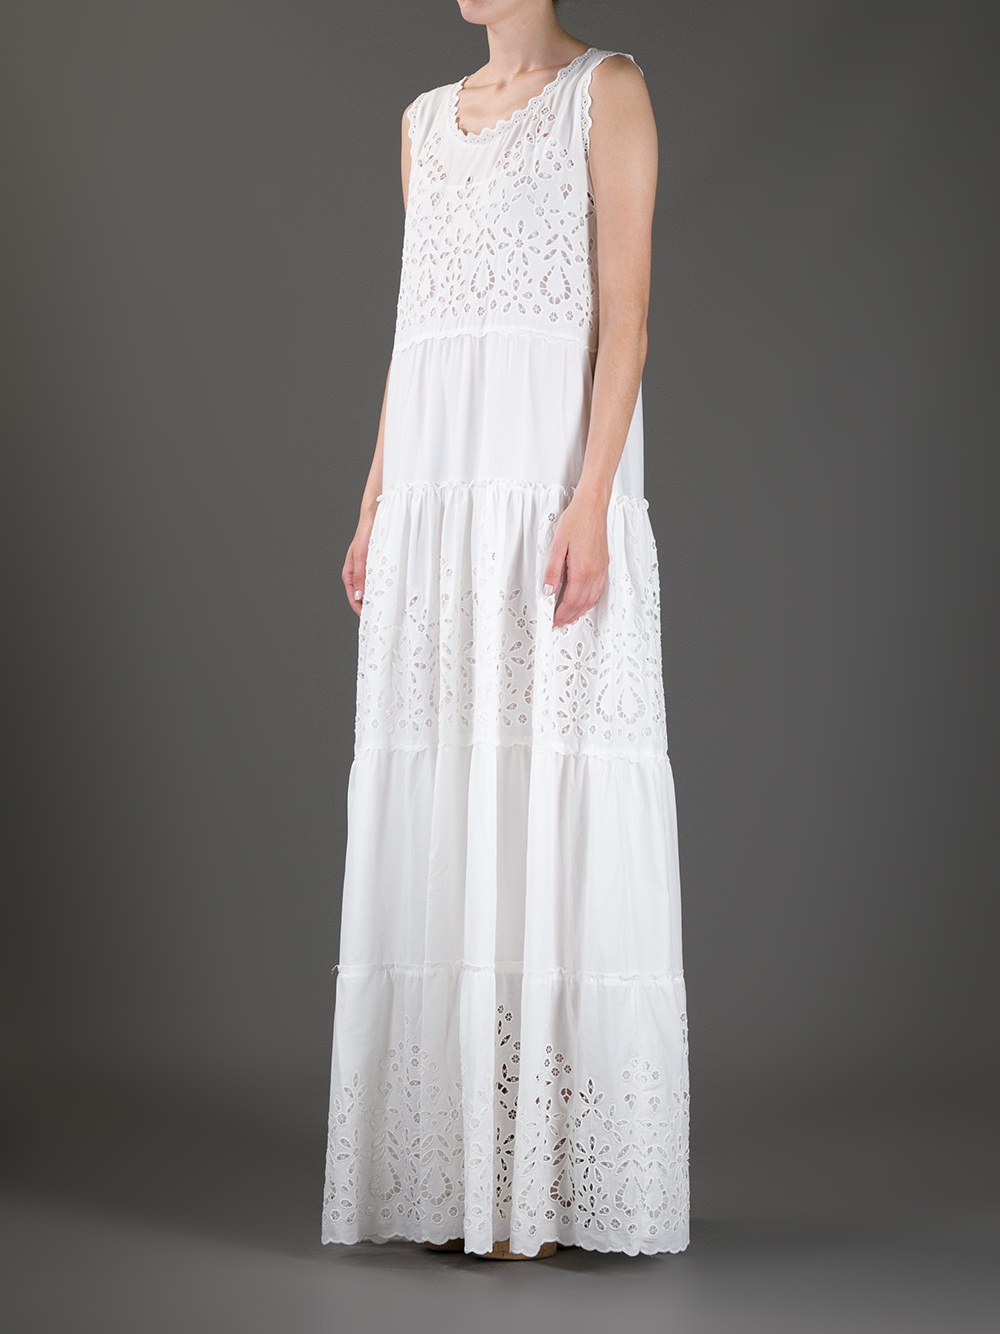 Lyst - Luisa Beccaria Eyelet Maxi Dress in White